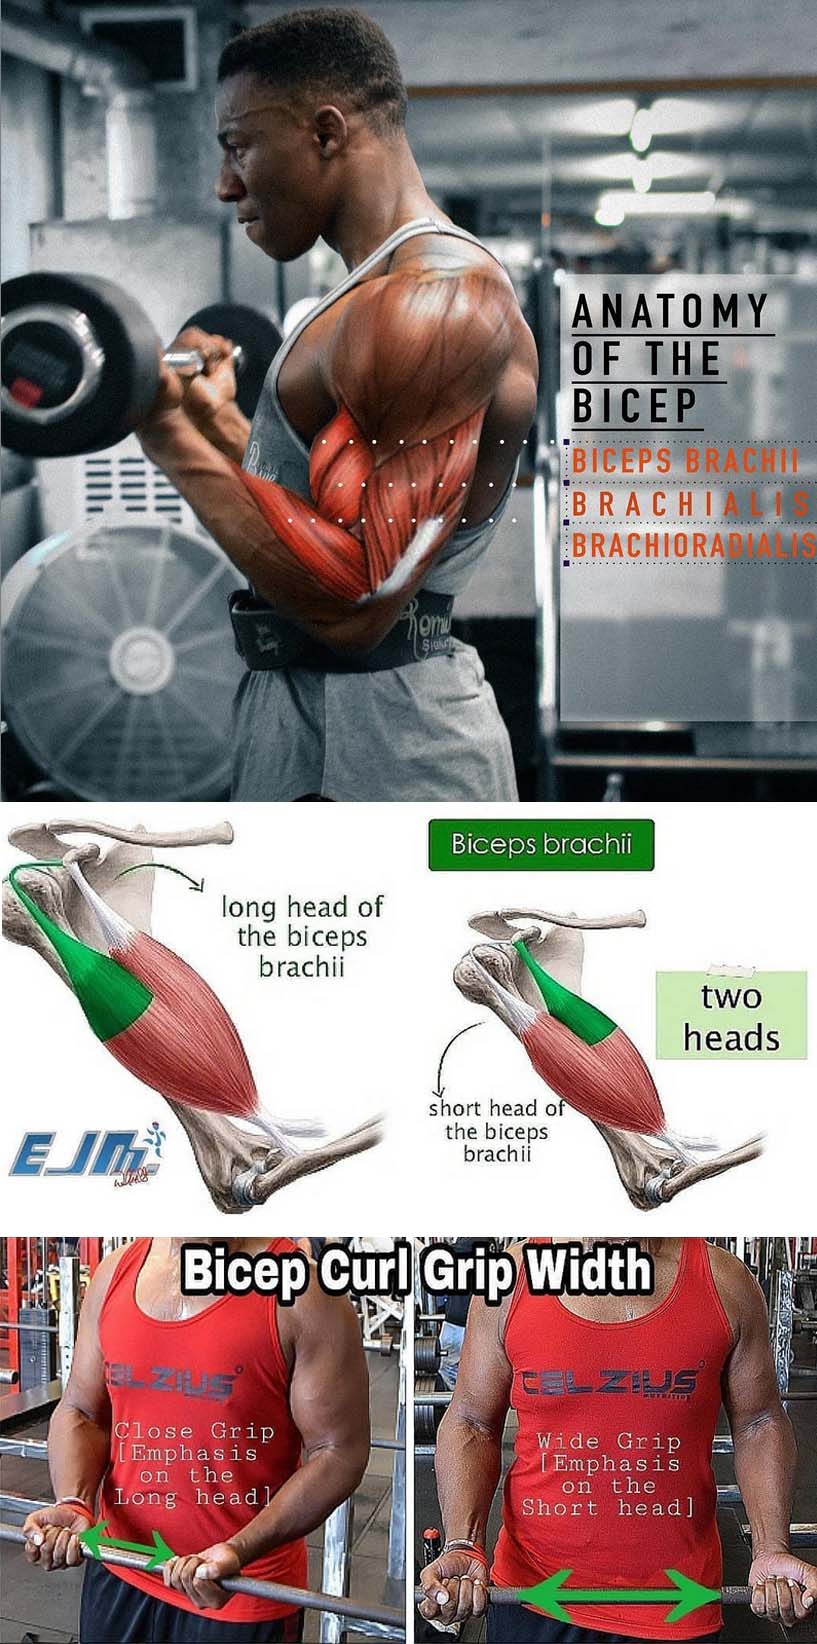 The Biceps & Brachii Training